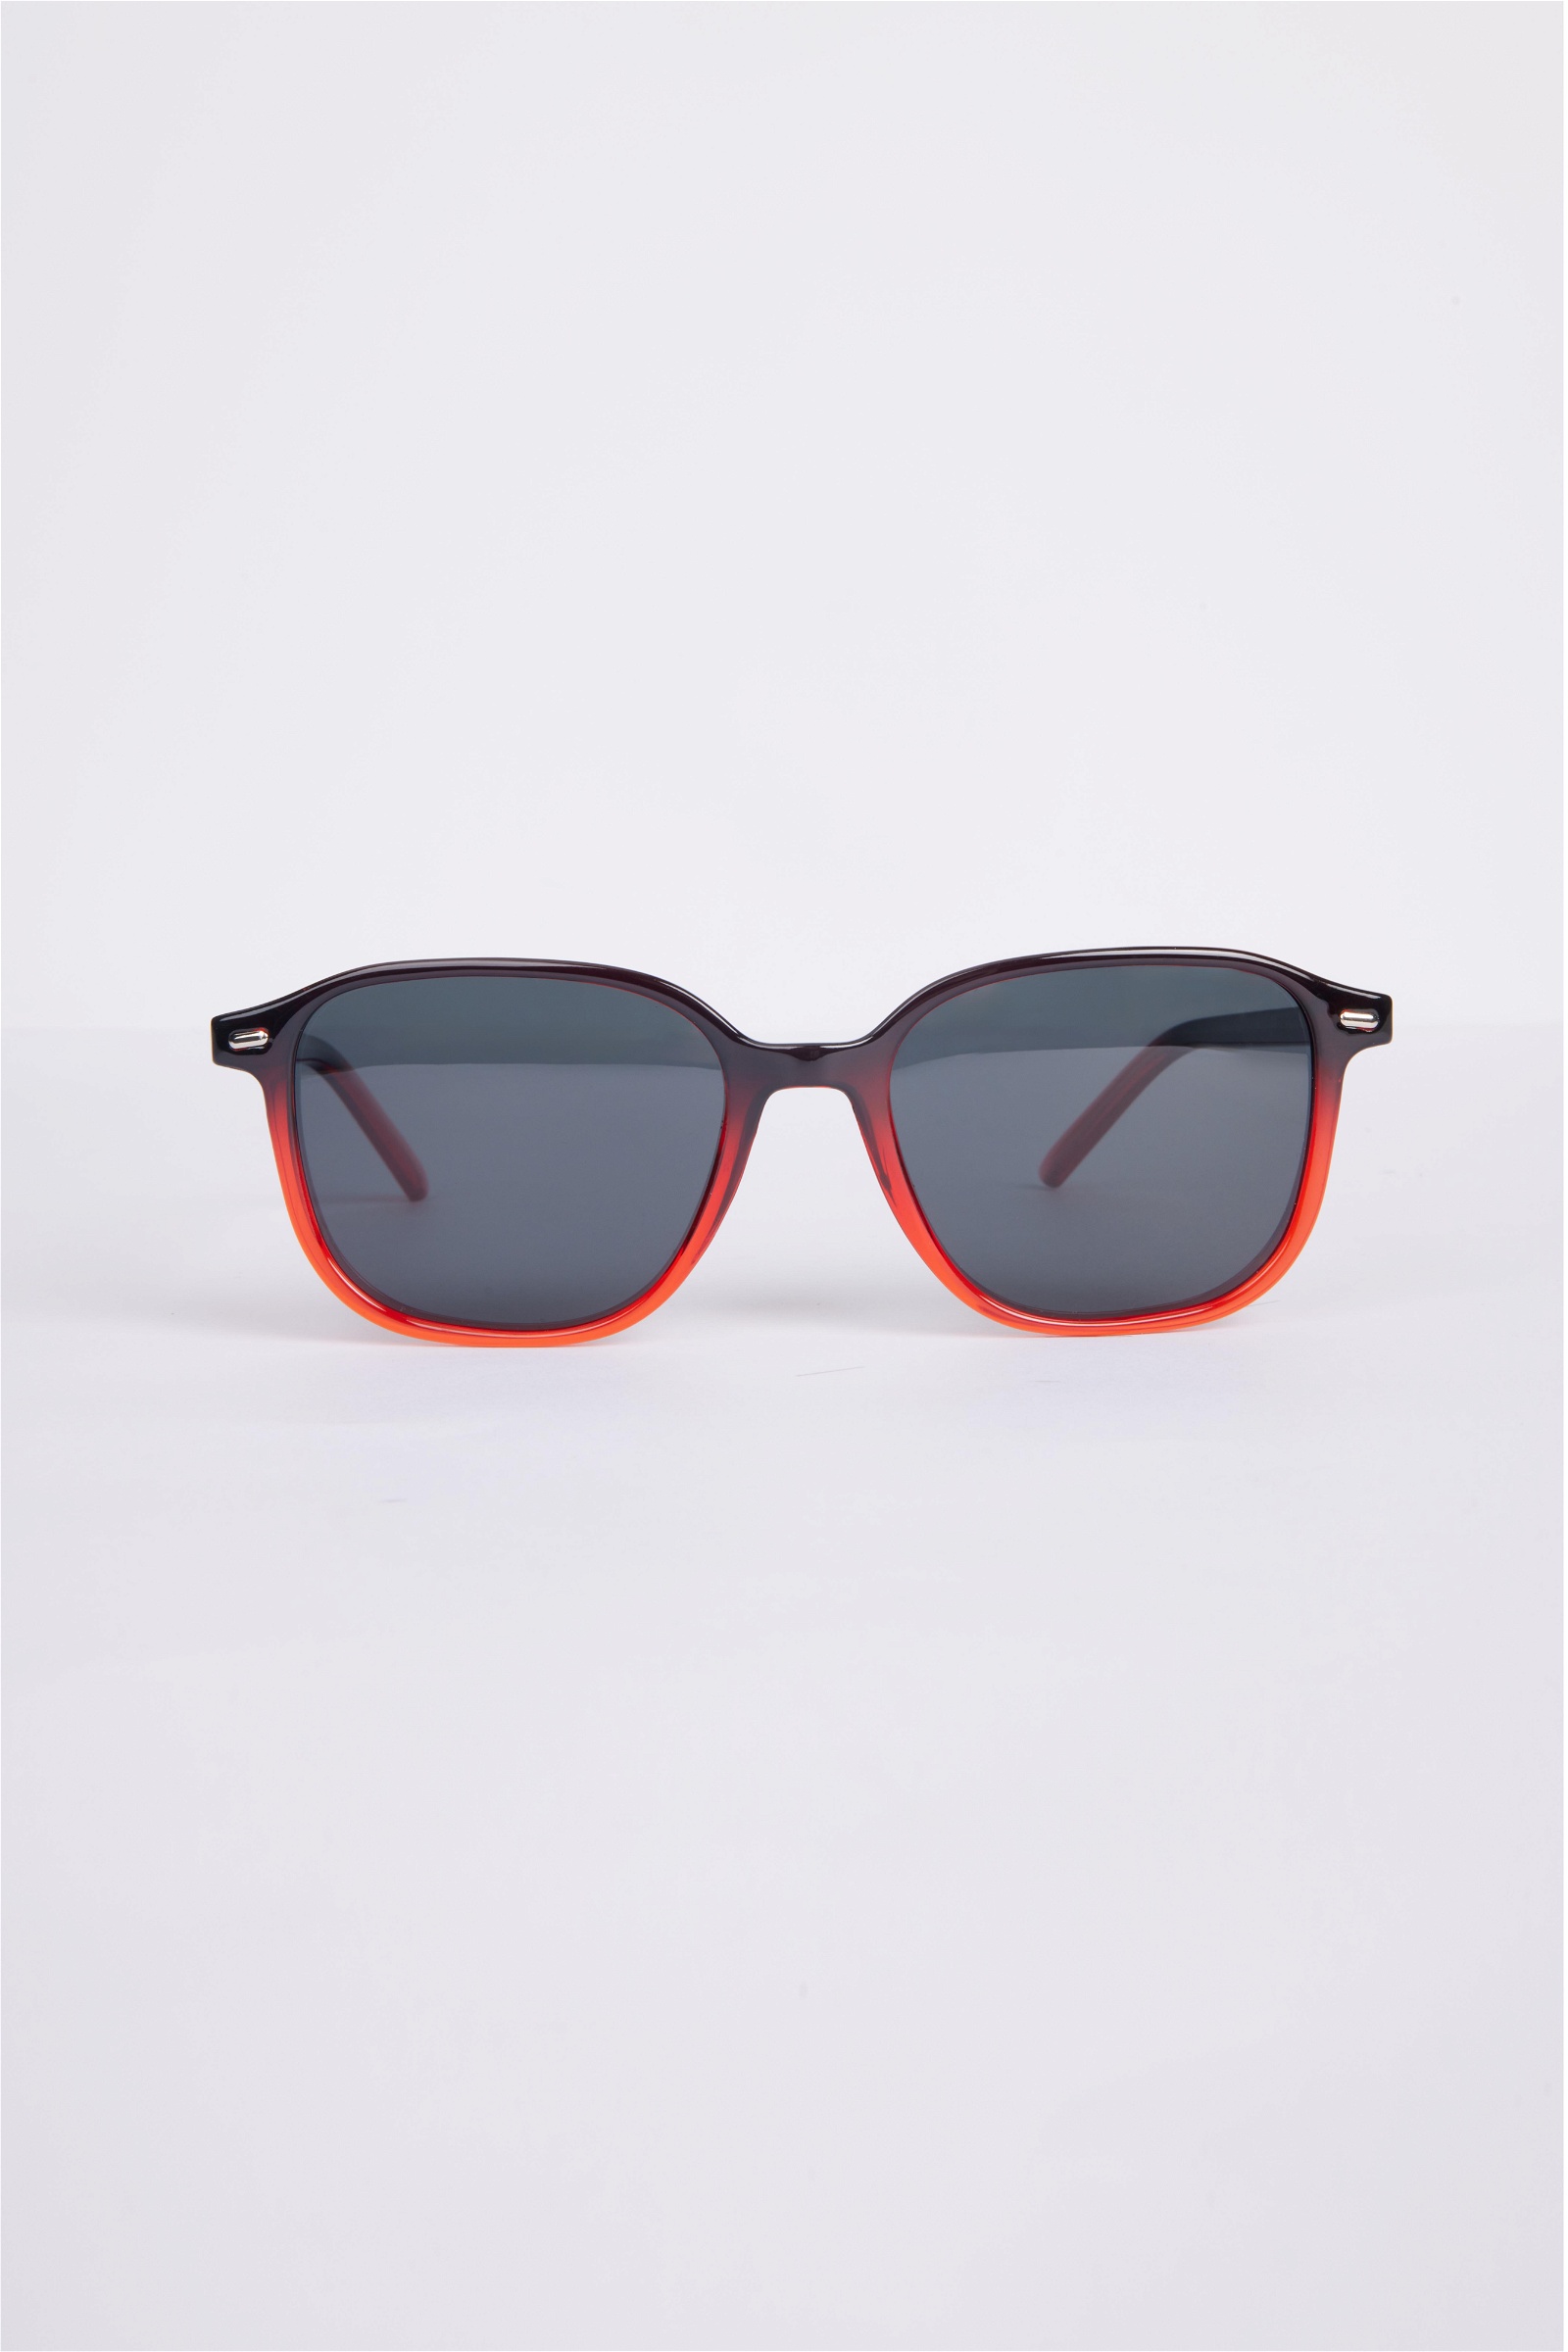 Plain Red Sunglasses